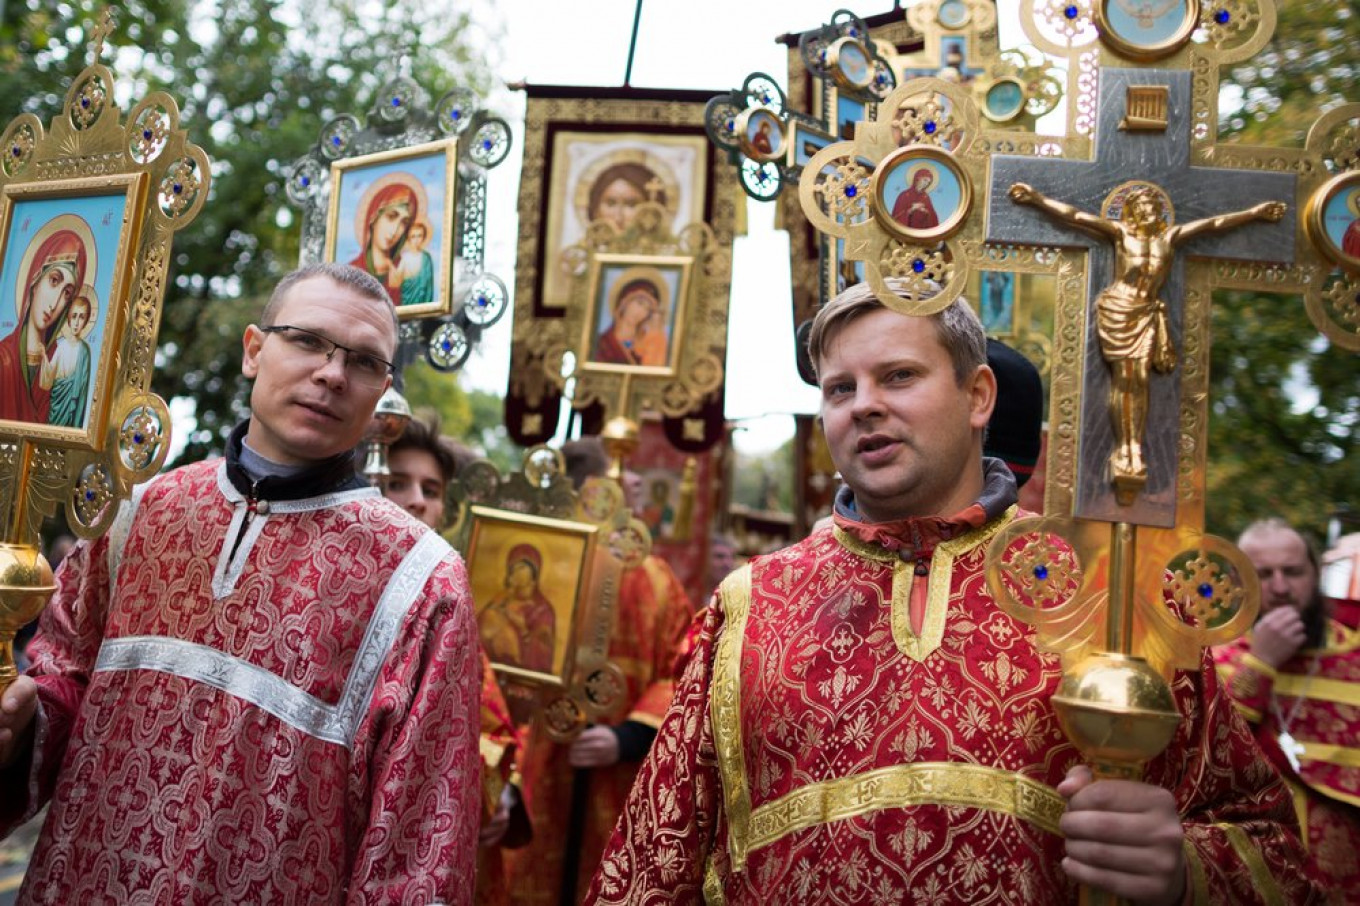 Moscow Monastery Launches Nightly Anti-Coronavirus Processions